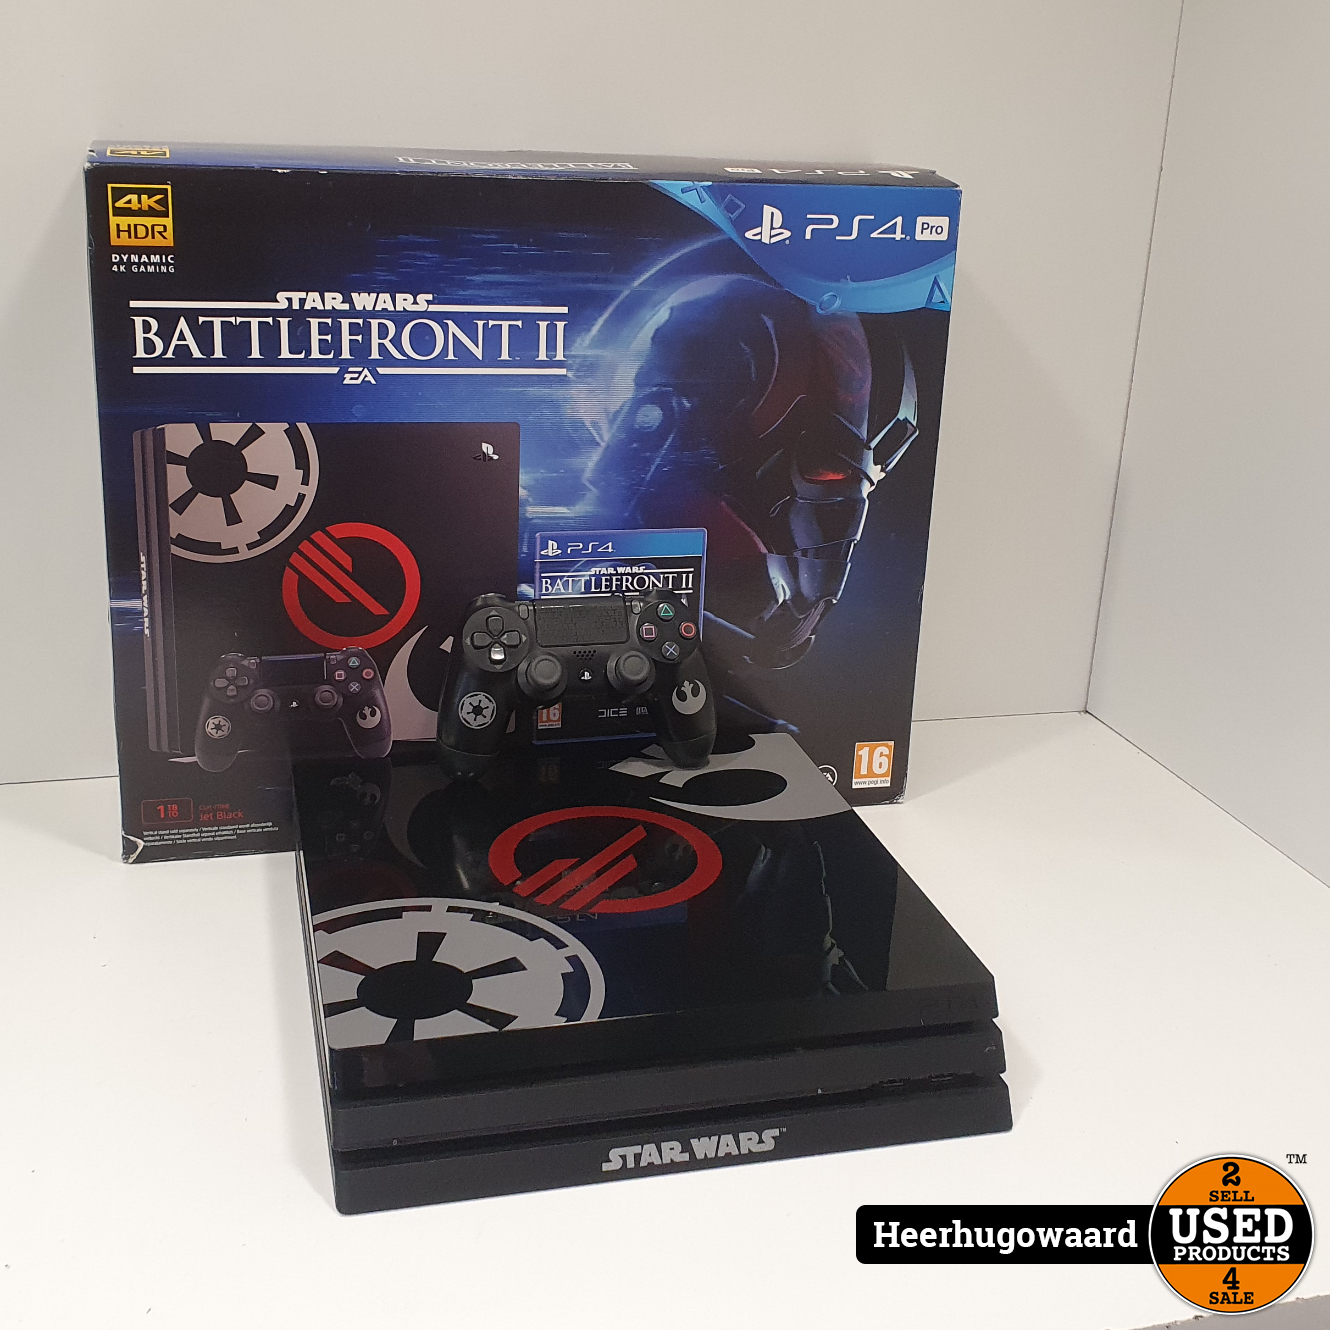 Playstation 4 Pro 1TB Wars Battlefront II Edition in Goede Staat - Used Products Heerhugowaard